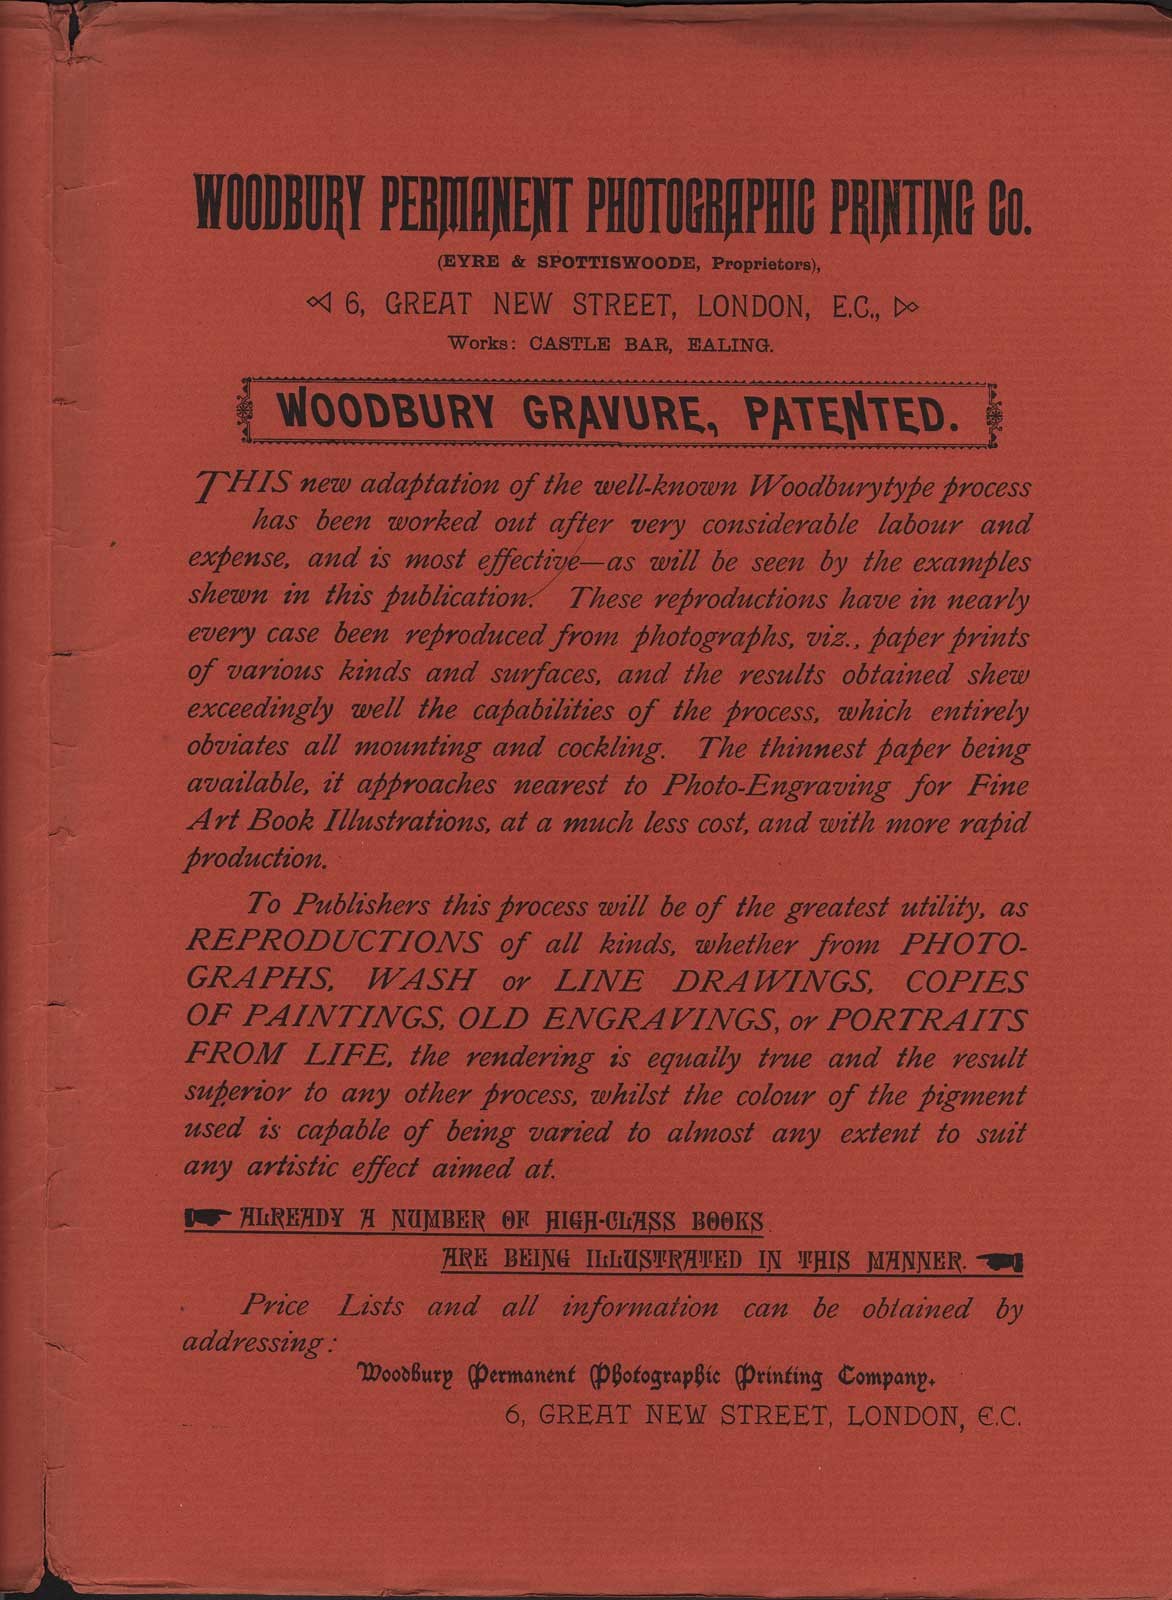 Advertisement: Woodbury Permanent Photographic Printing Co.